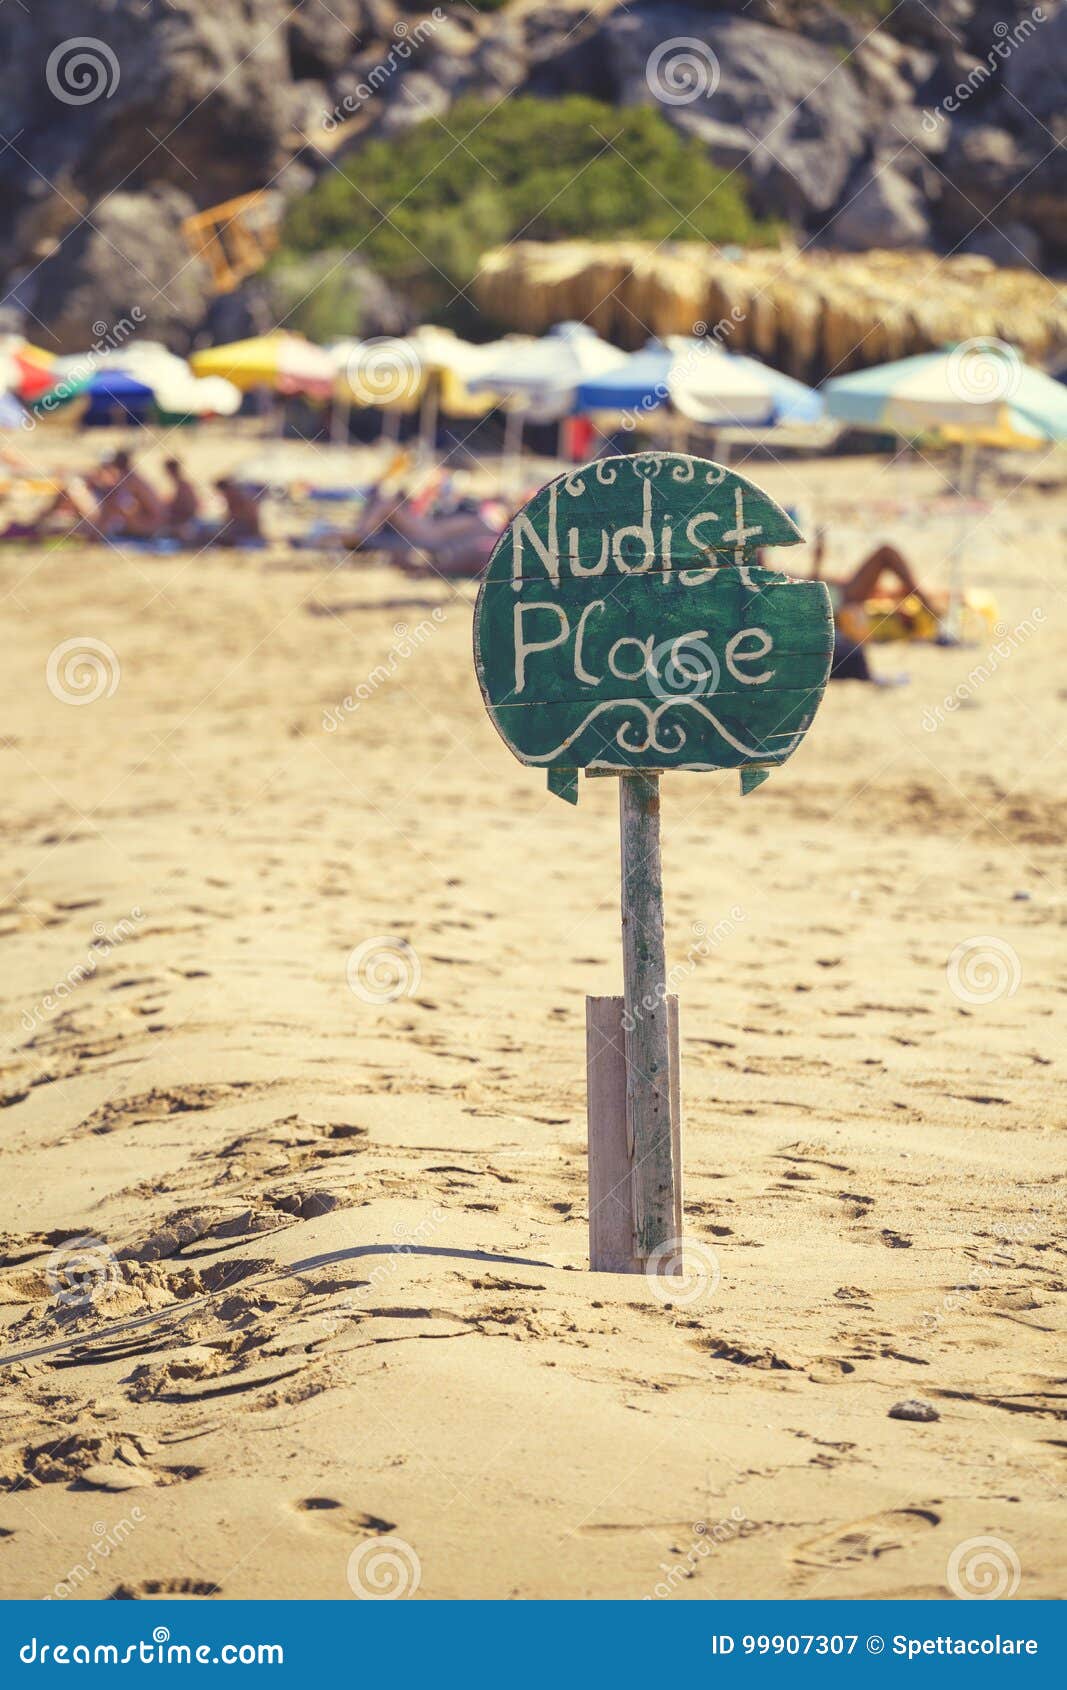 latest nude beach voyeur